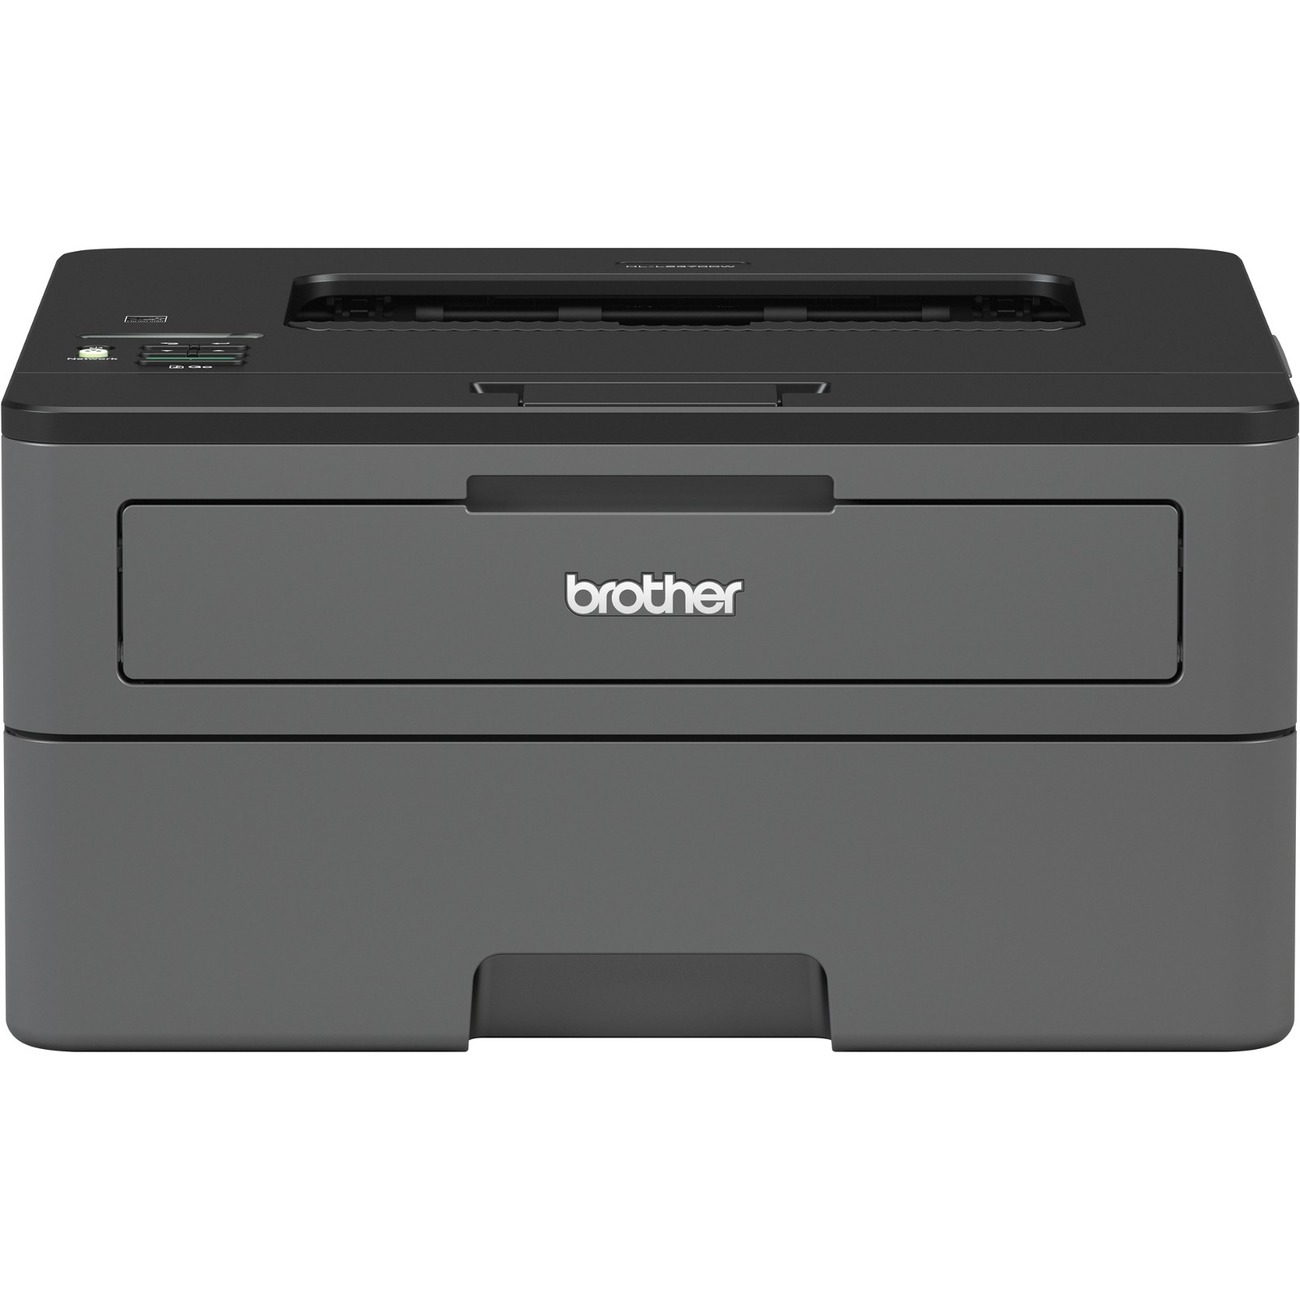 Brother Monochrome Laser Printer RHLL2370DW Printers Newegg.com